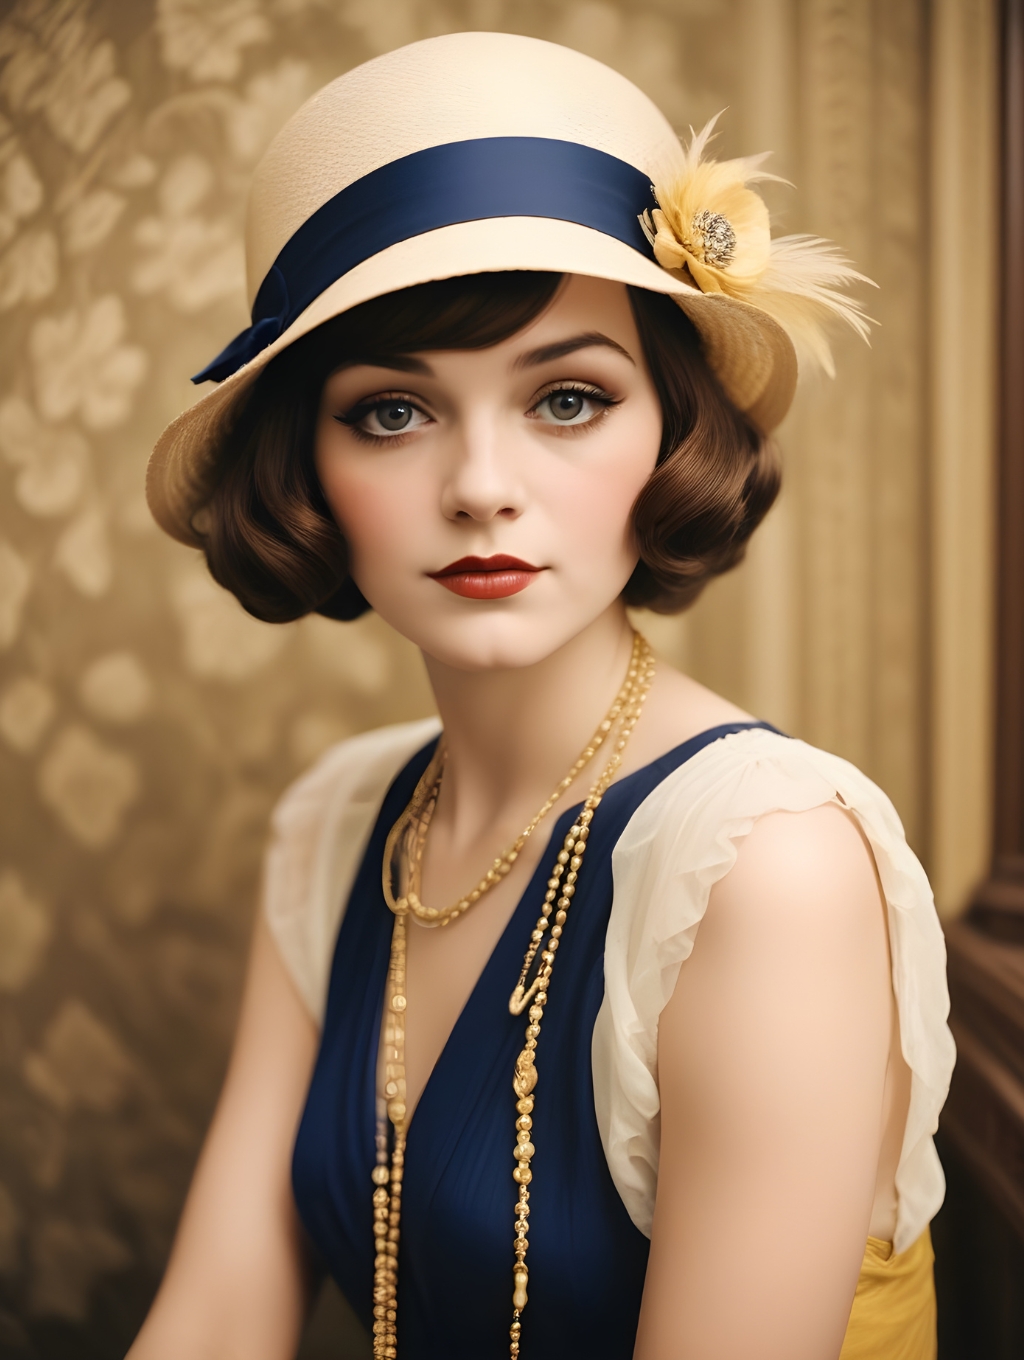 Gatsby Portraits Women: Image Frames & Self-Portraits-Theme:2